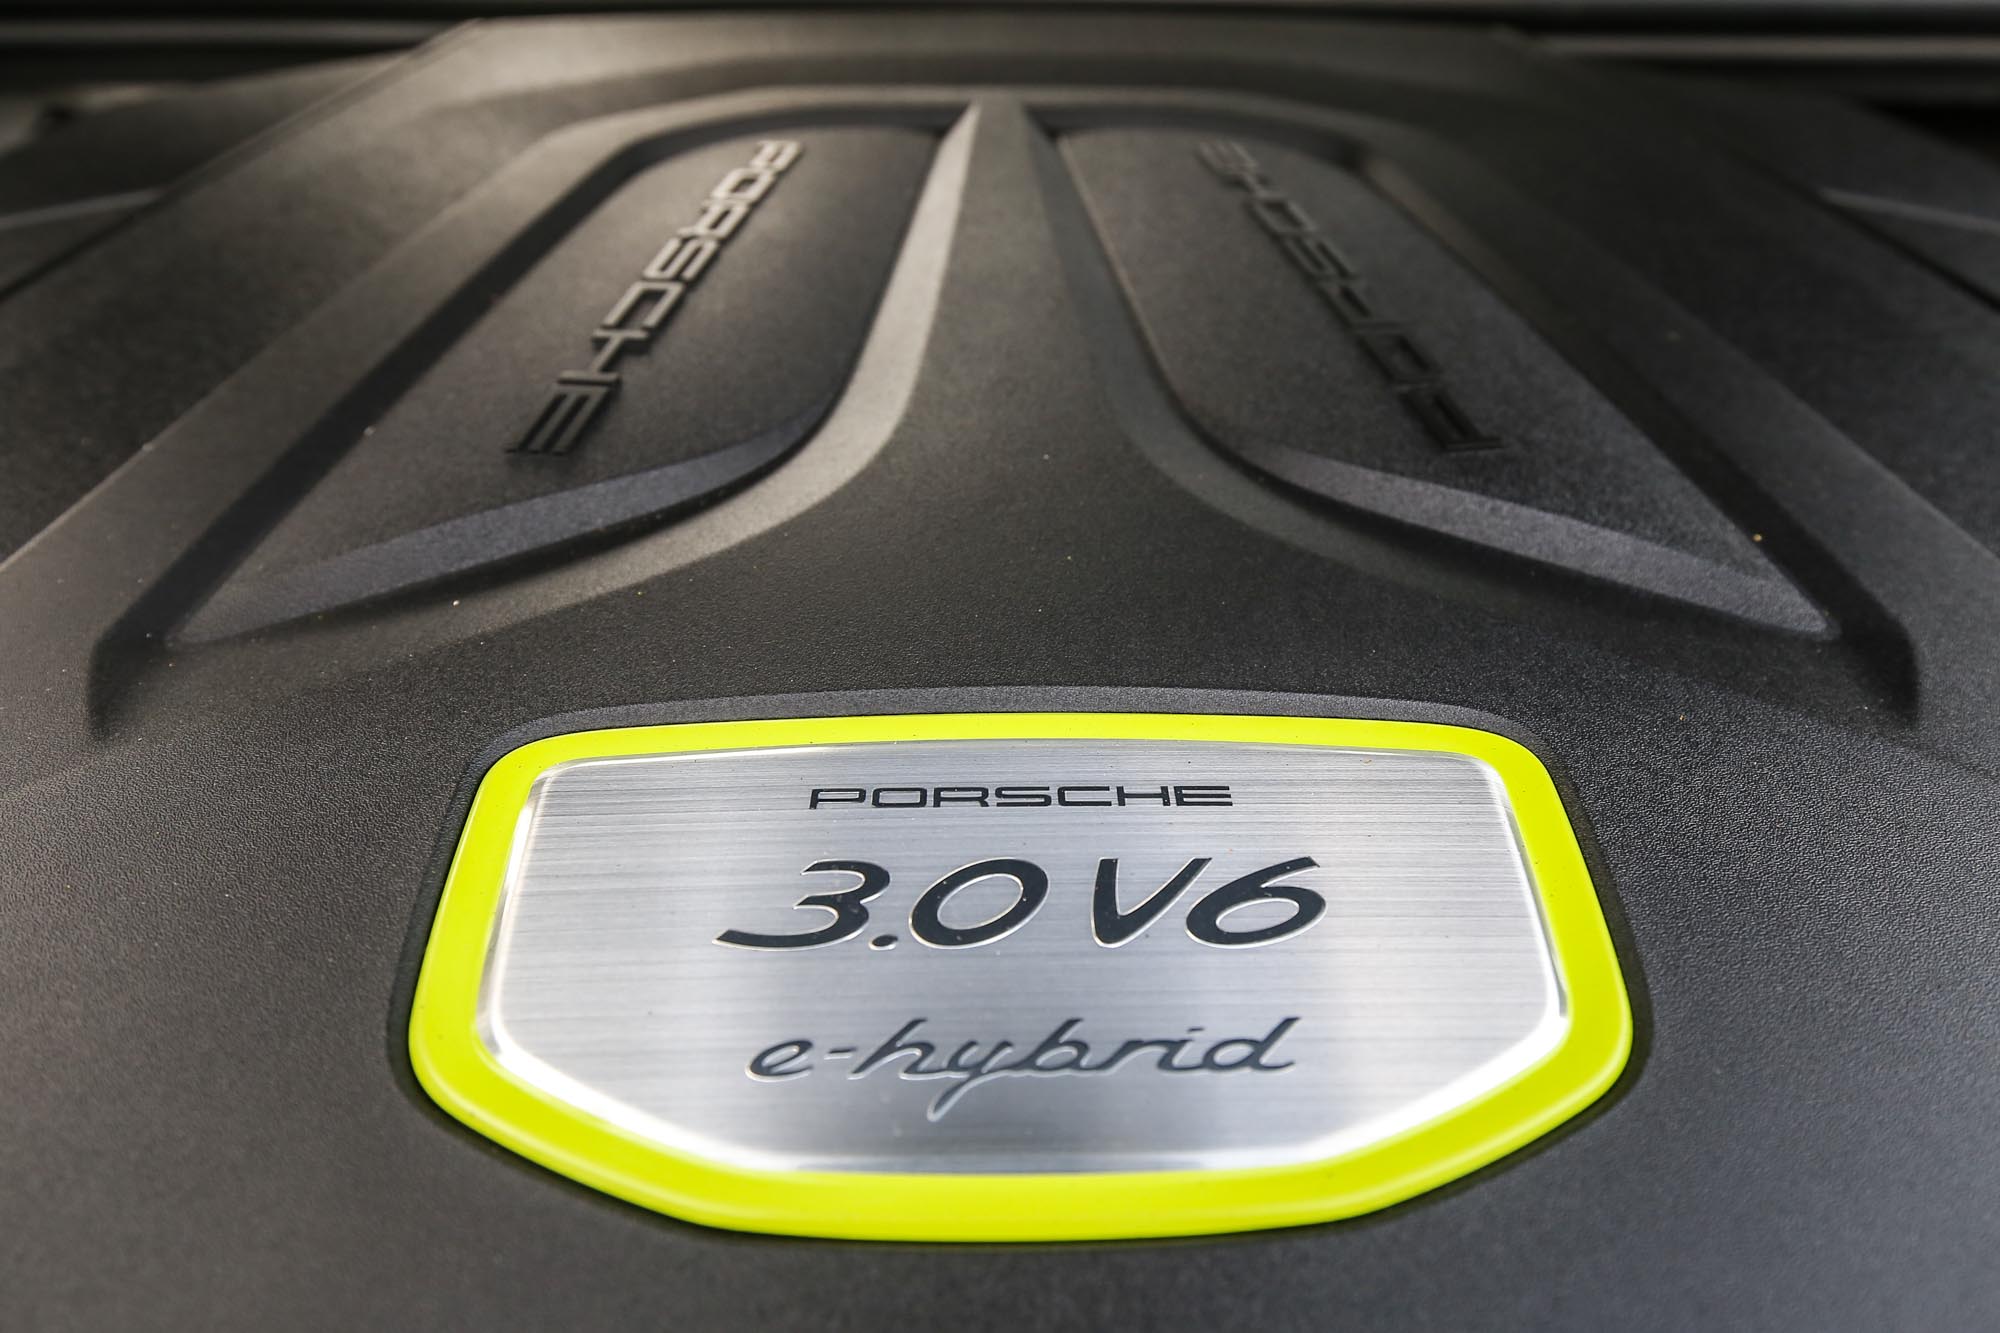 Cayenne E-Hybrid 搭載 3.0升V6汽油引擎，本體具備 340hp / 450Nm 動力輸出，而電動馬達具備 136hp / 400Nm 輸出，換算後的綜效動力值為 462hp / 700Nm。